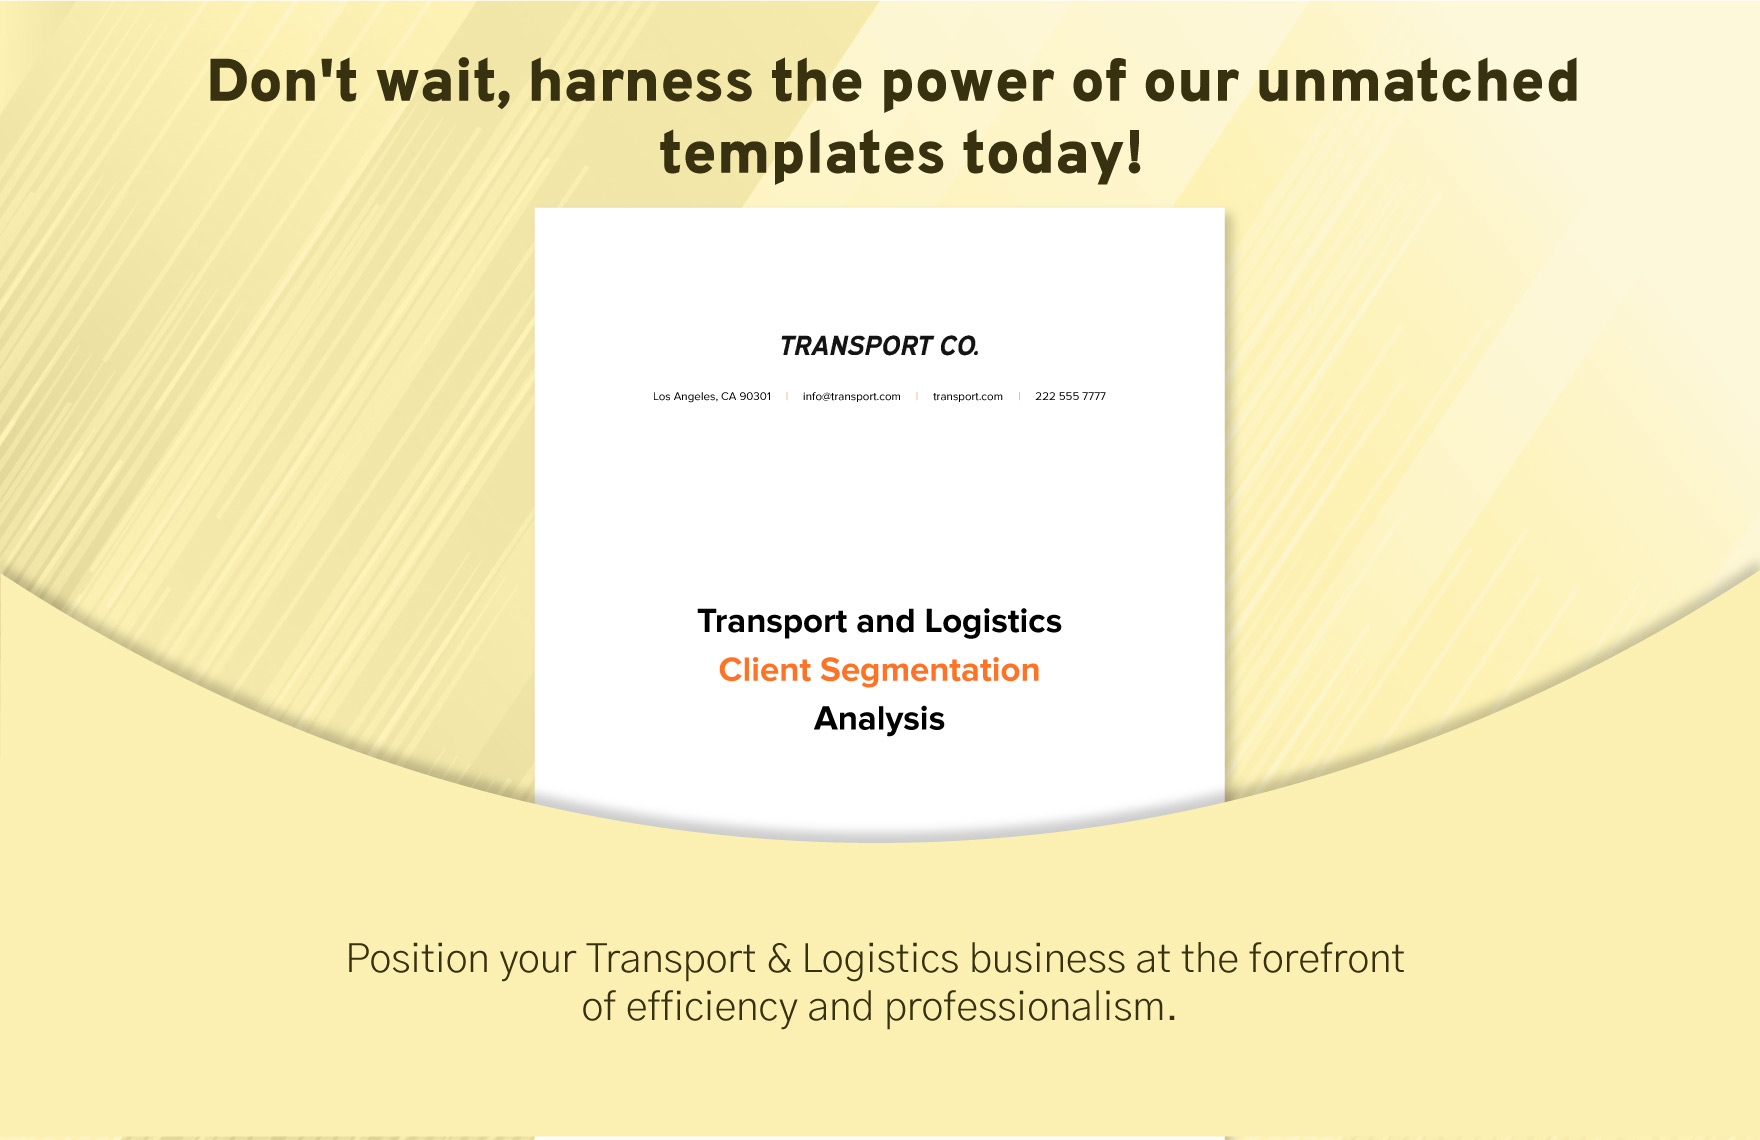 Transport and Logistics Client Segmentation Analysis Template